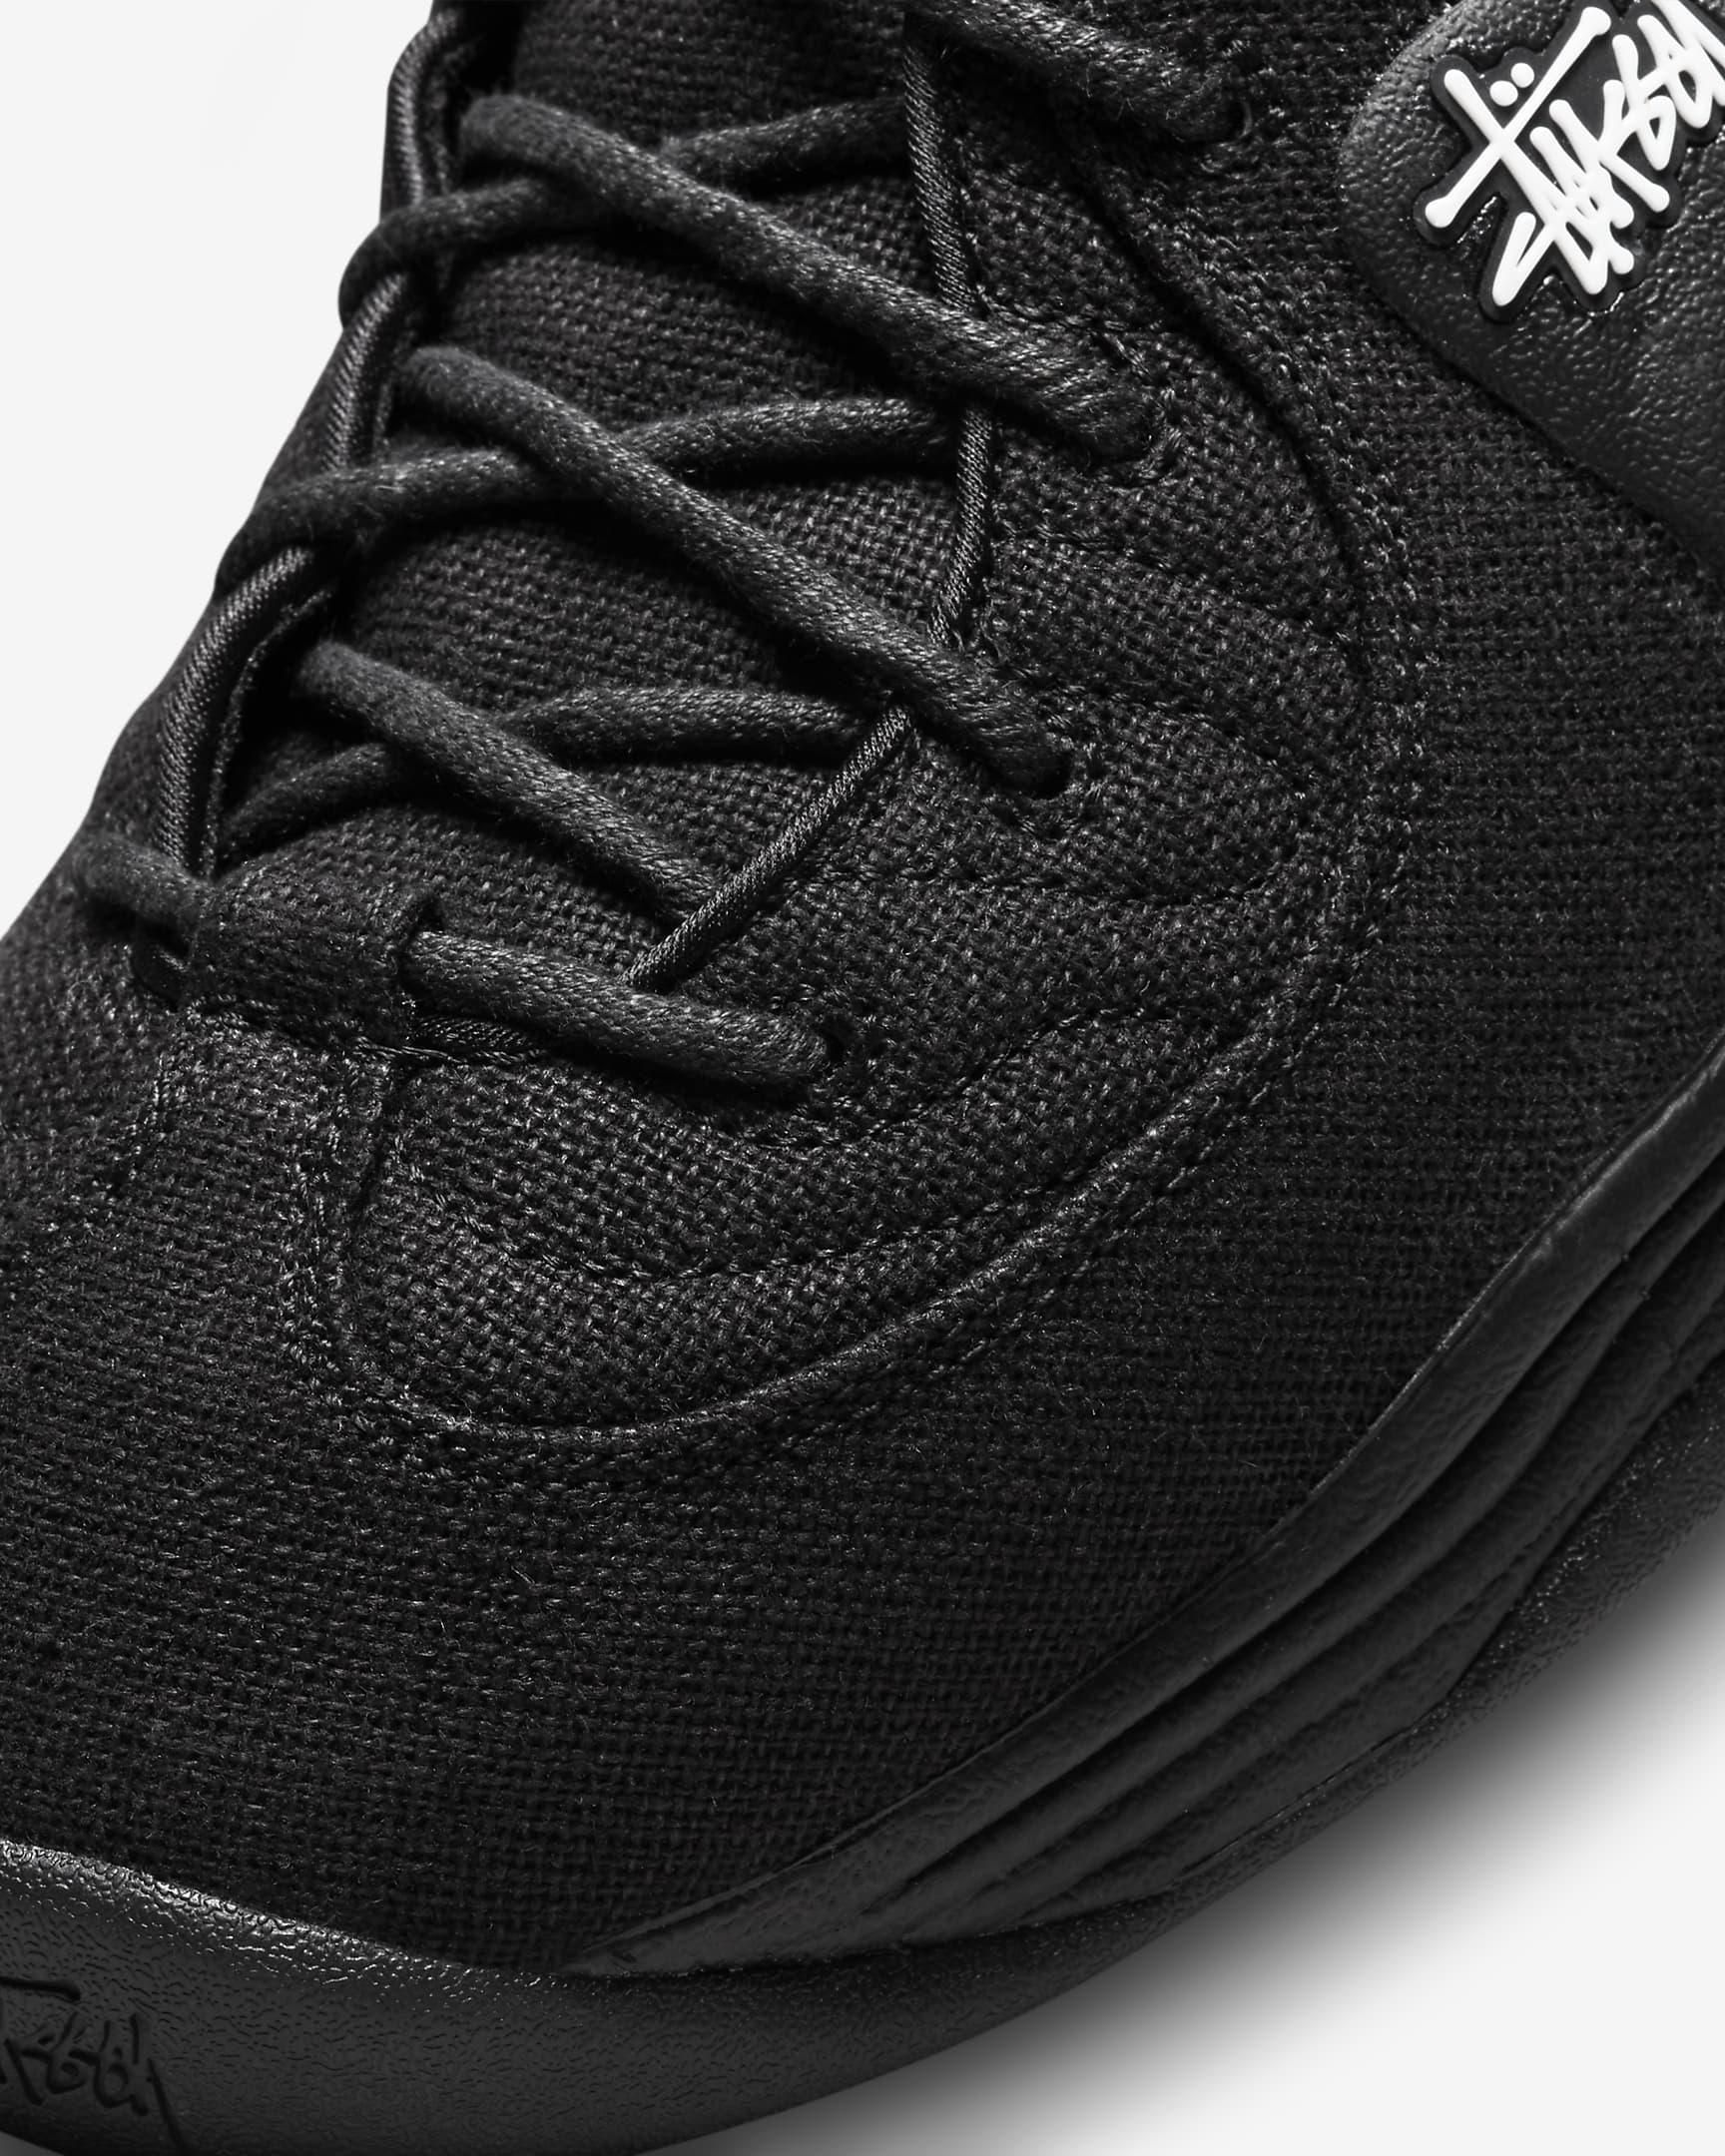 Nike Air Penny 2 x Stüssy Men's Shoes - Black/Black/White